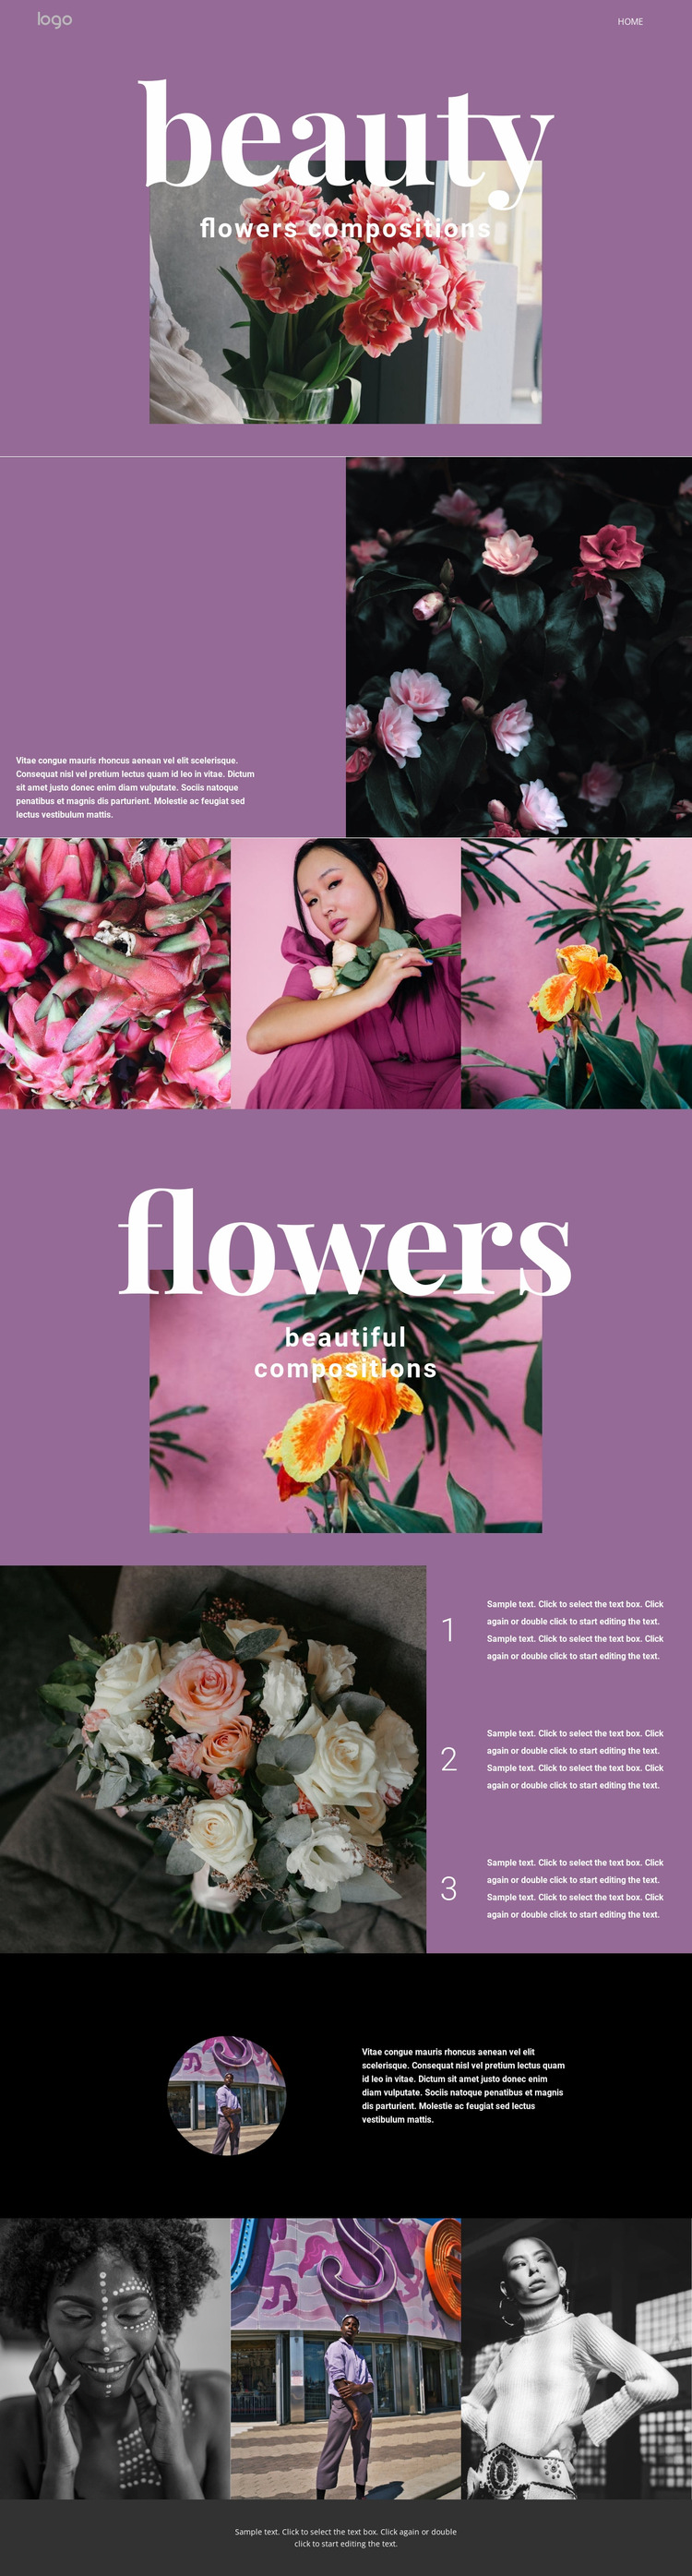 Flower salon WordPress Website Builder